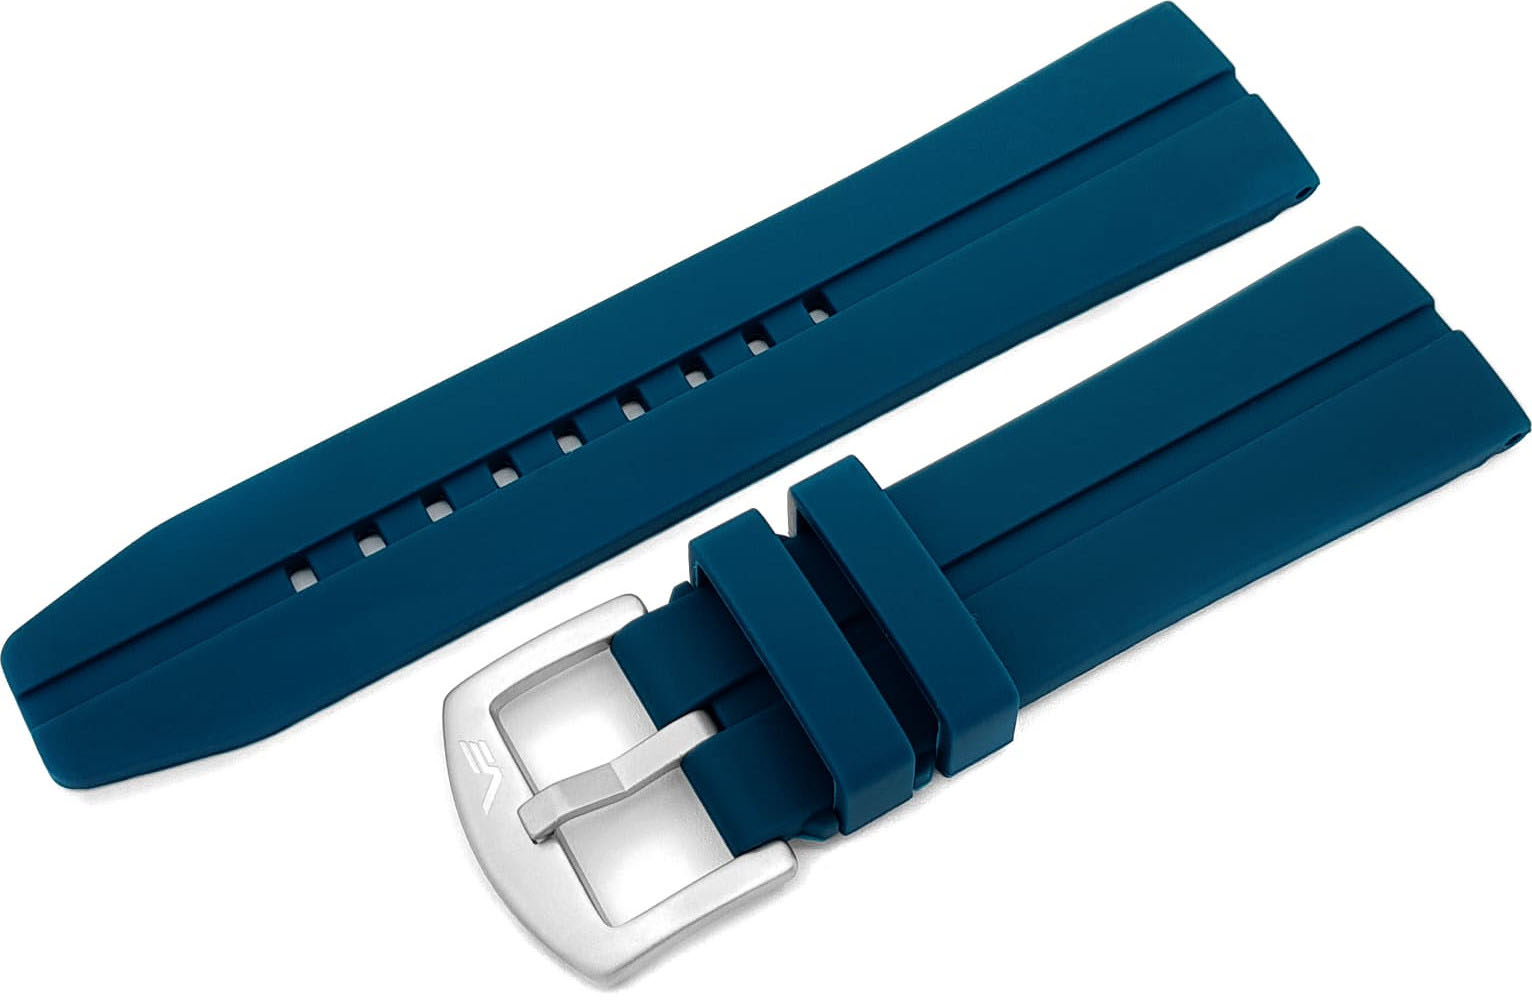   Almaz / NP1 silicone strap / 22 mm / blue / clasp polished 